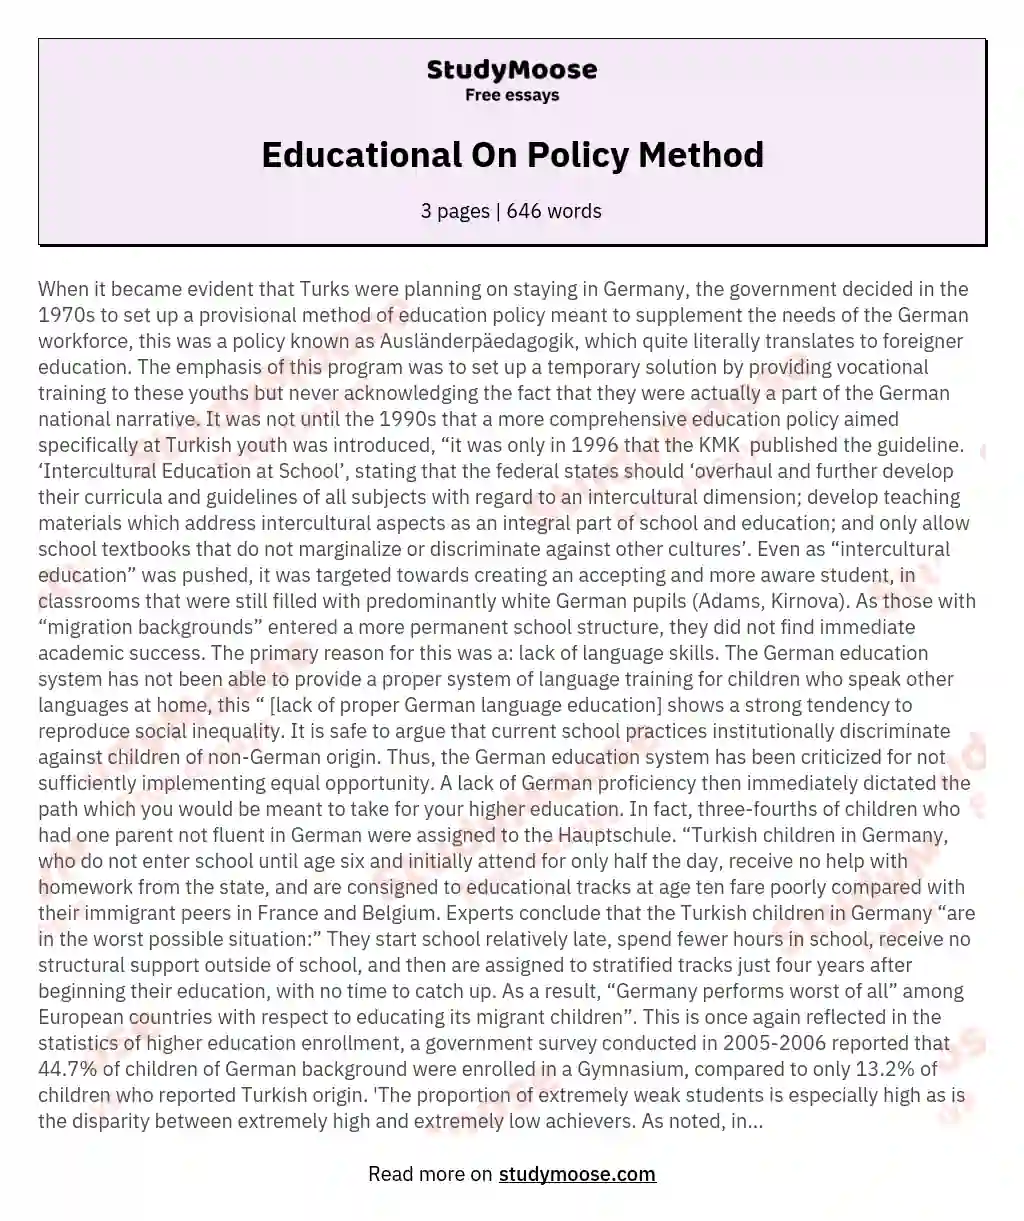 Educational On Policy Method essay